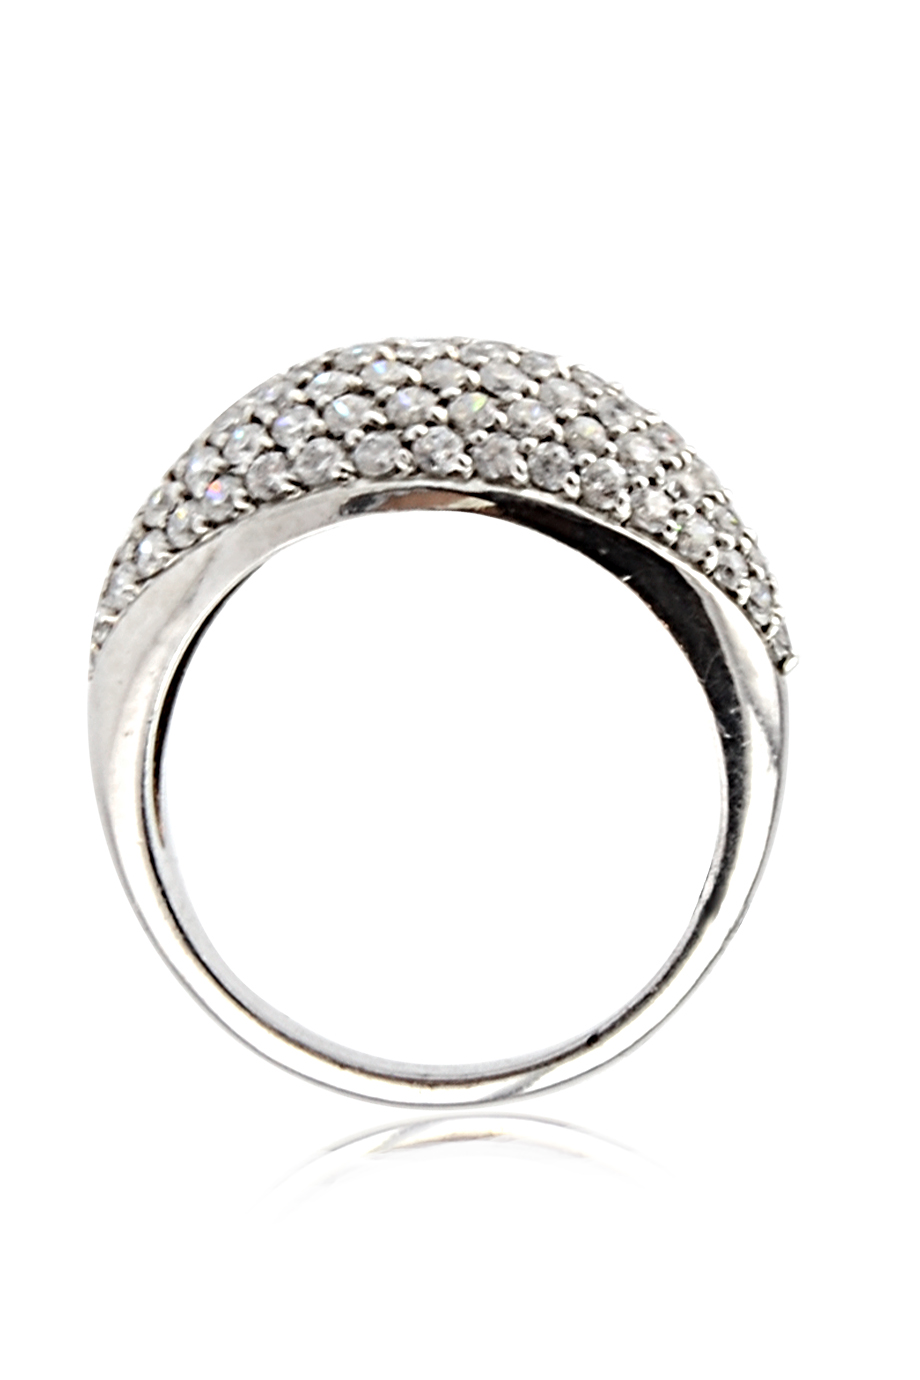 Nhẫn Bạc 925 Silver 925 Crystal Pave Ring 4.23gr